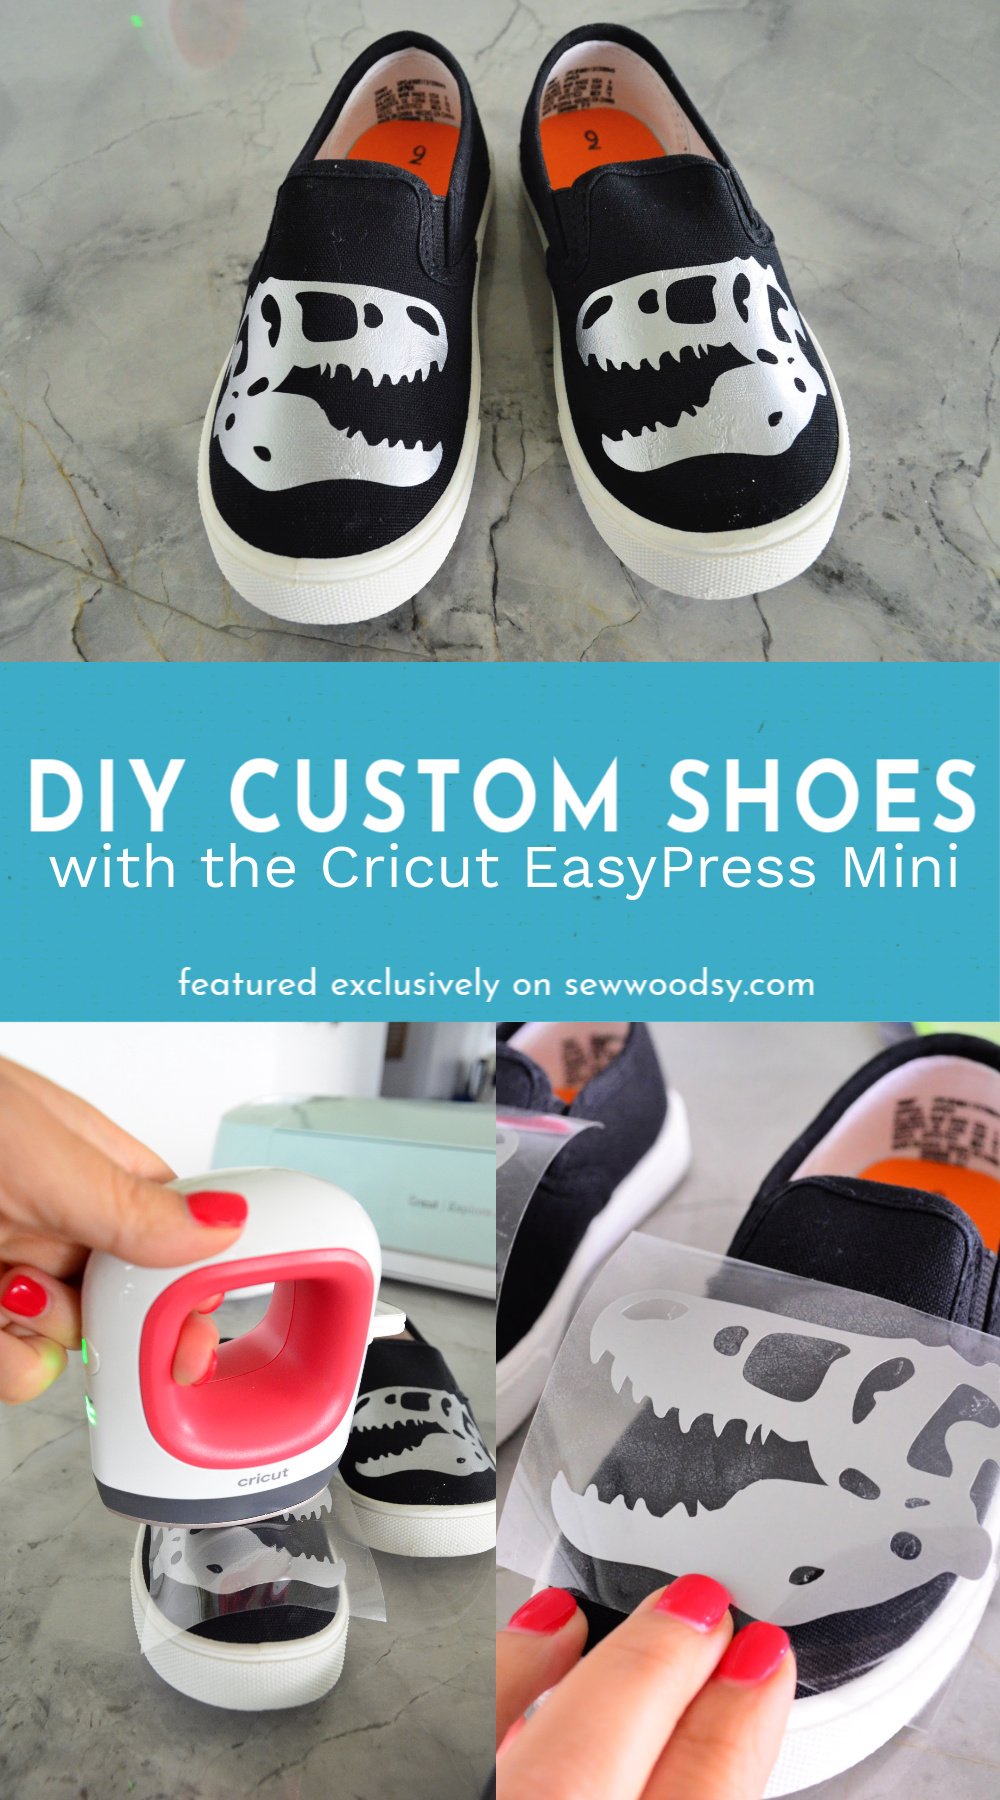 Three photos of how to use the Cricut EasyPress Mini to make custom shoes.